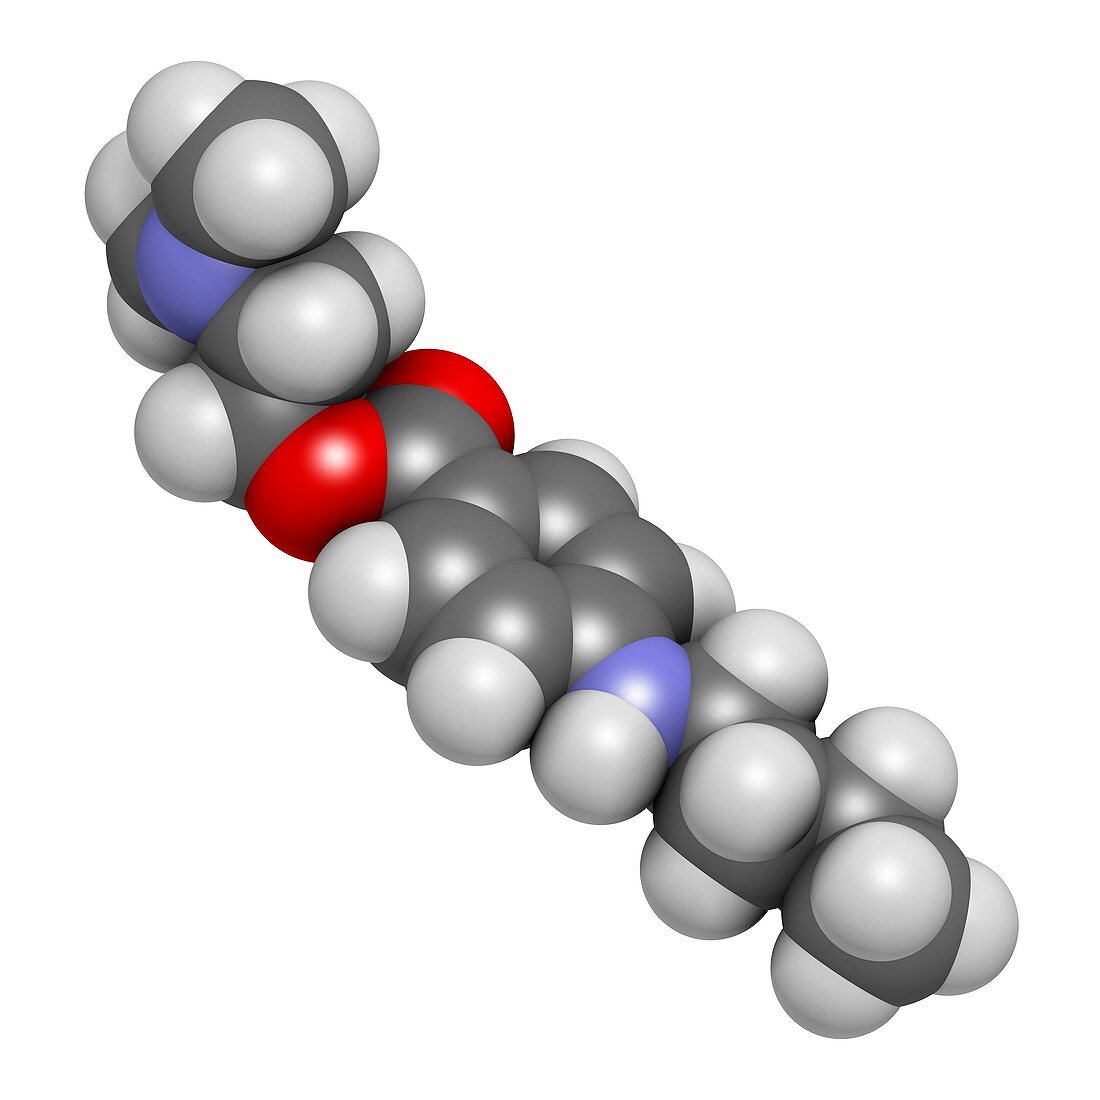 Tetracaine local anesthetic drug molecule